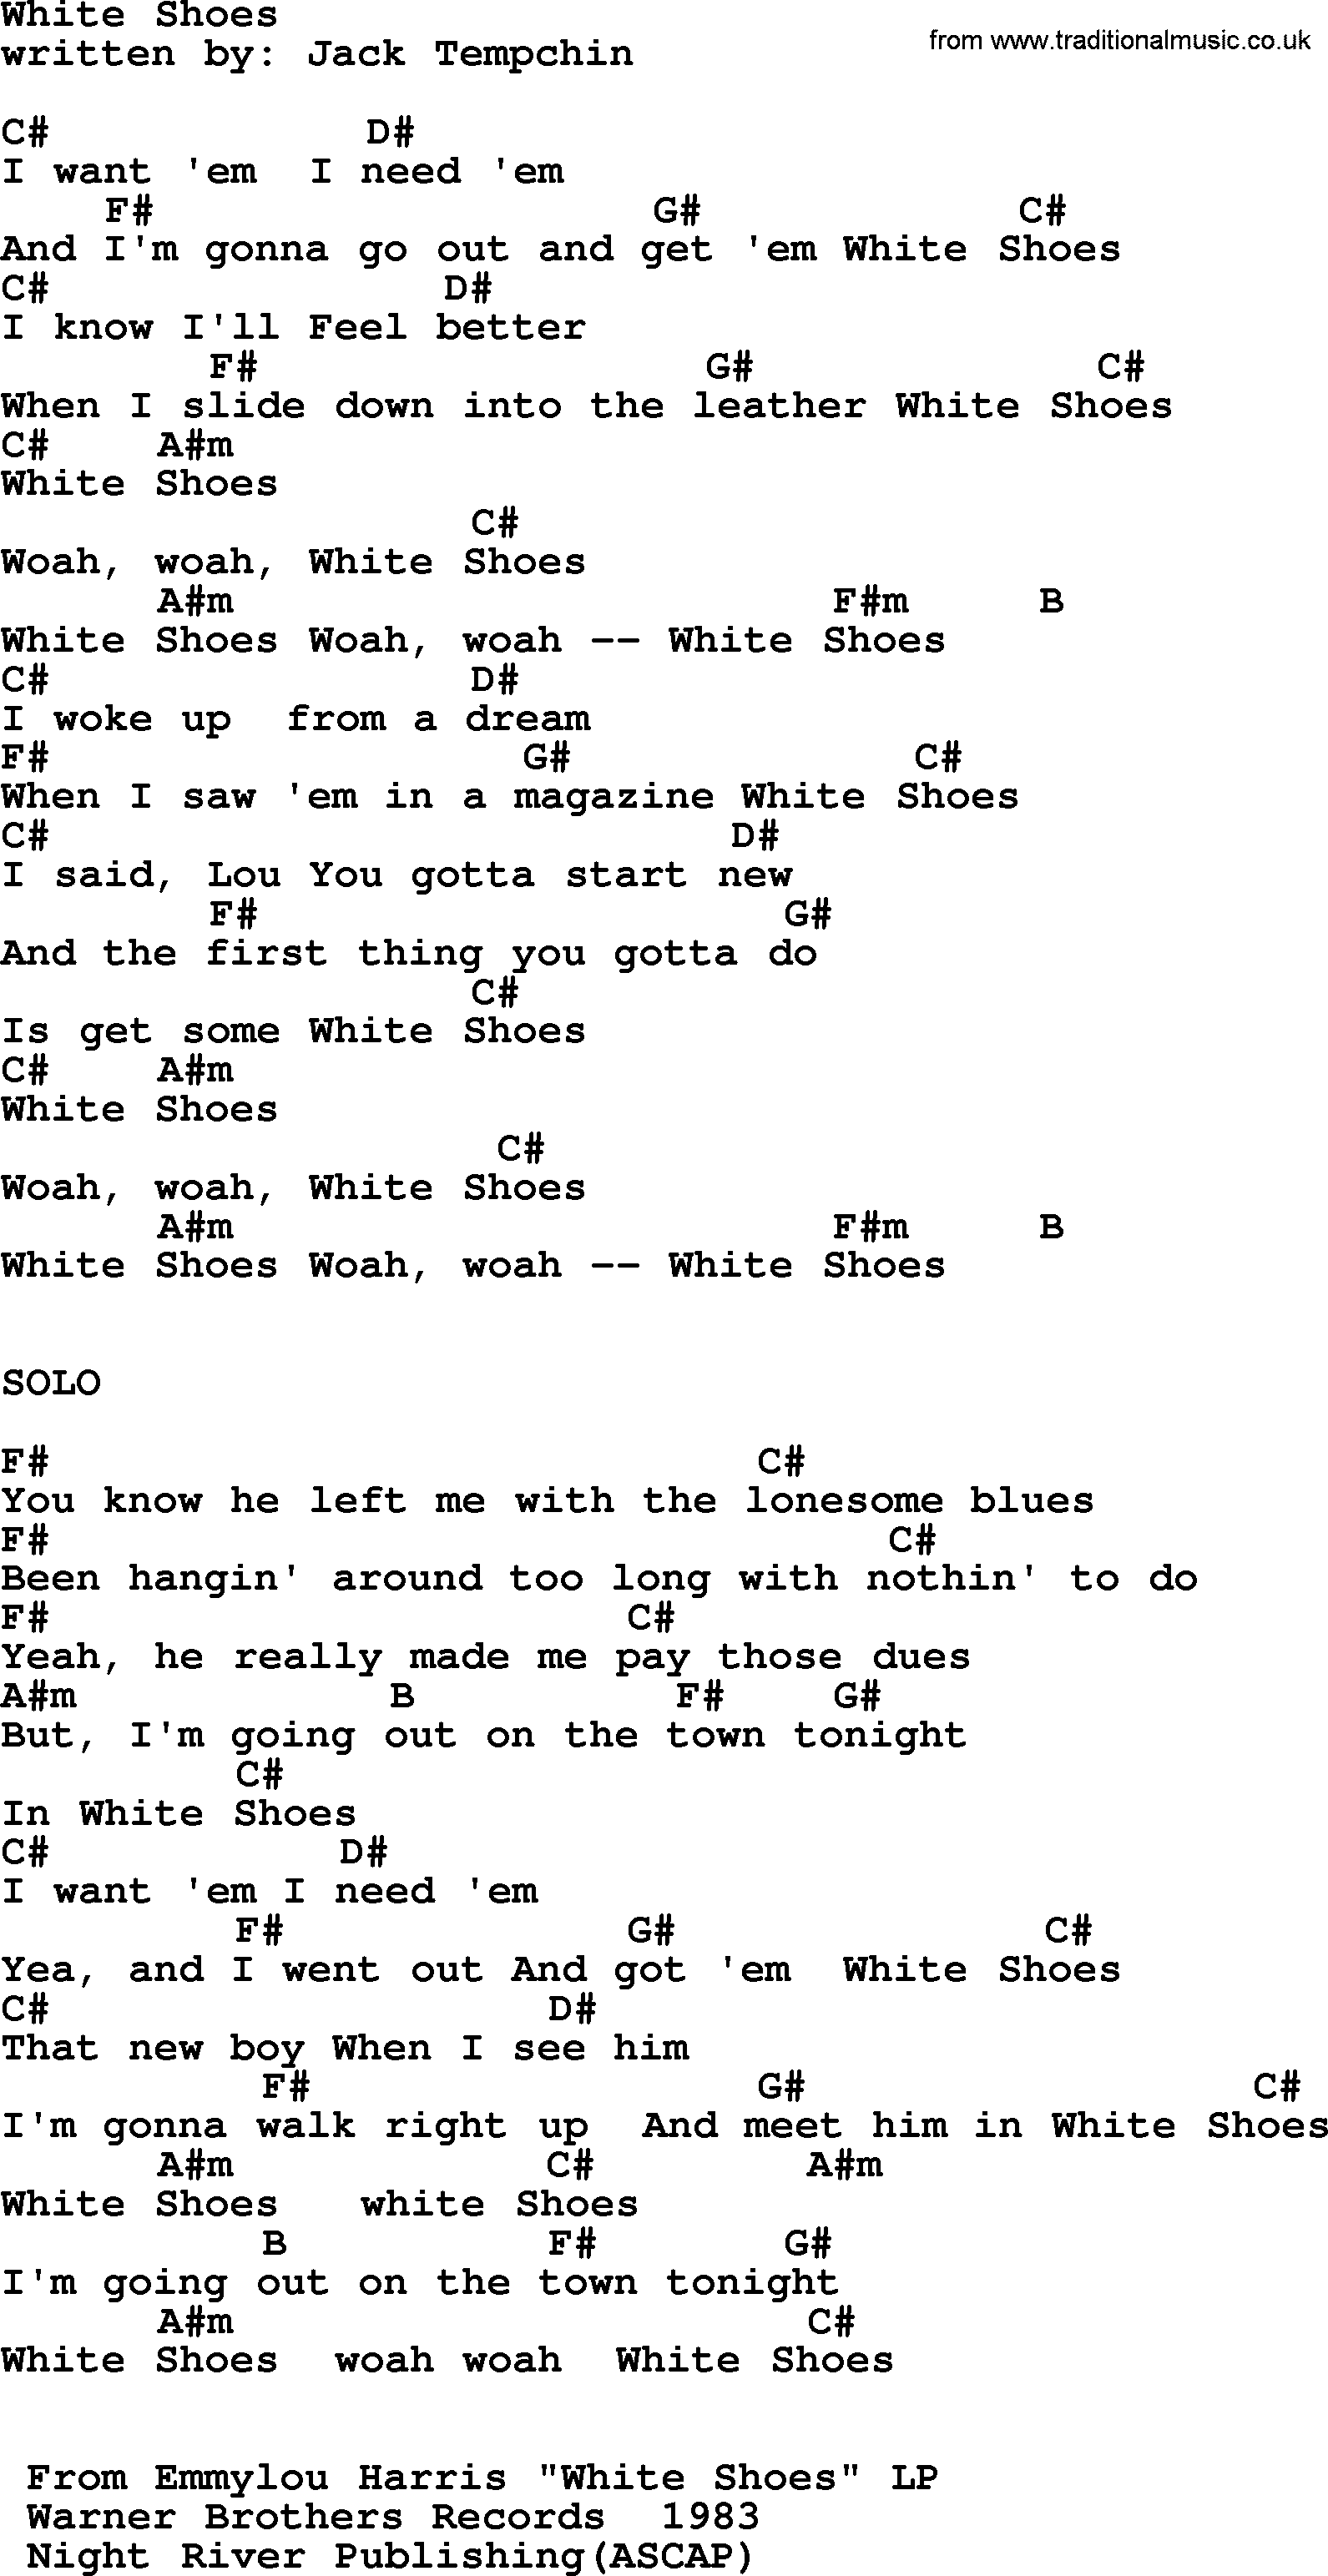 Emmylou Harris song: White Shoes lyrics and chords